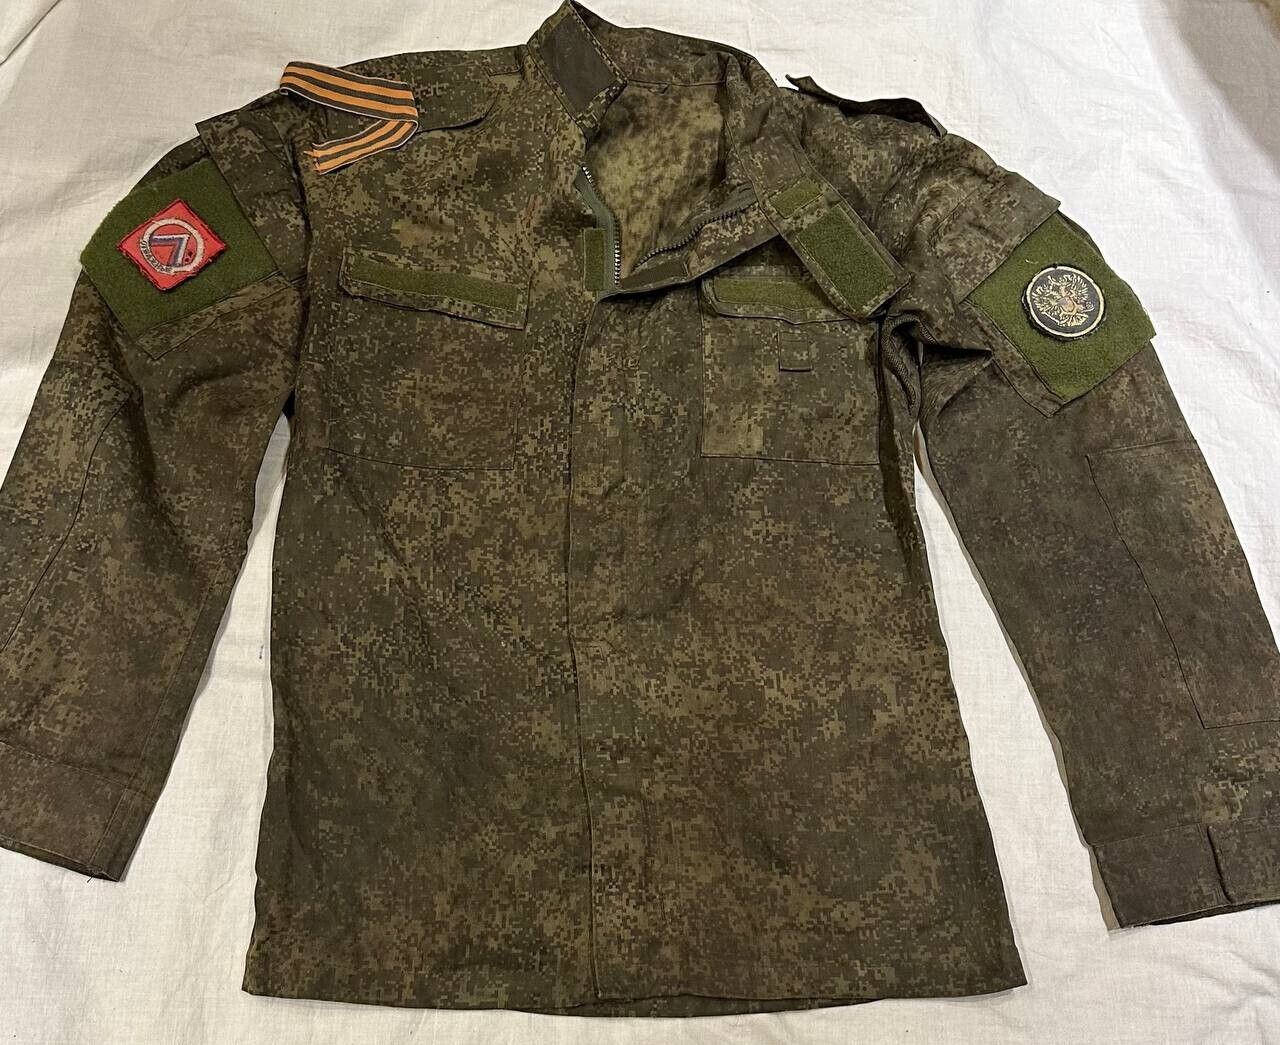 Russian Army Summer Jacket Uniform Patches Chevrons Flag Pants Hat Cover Ratnik